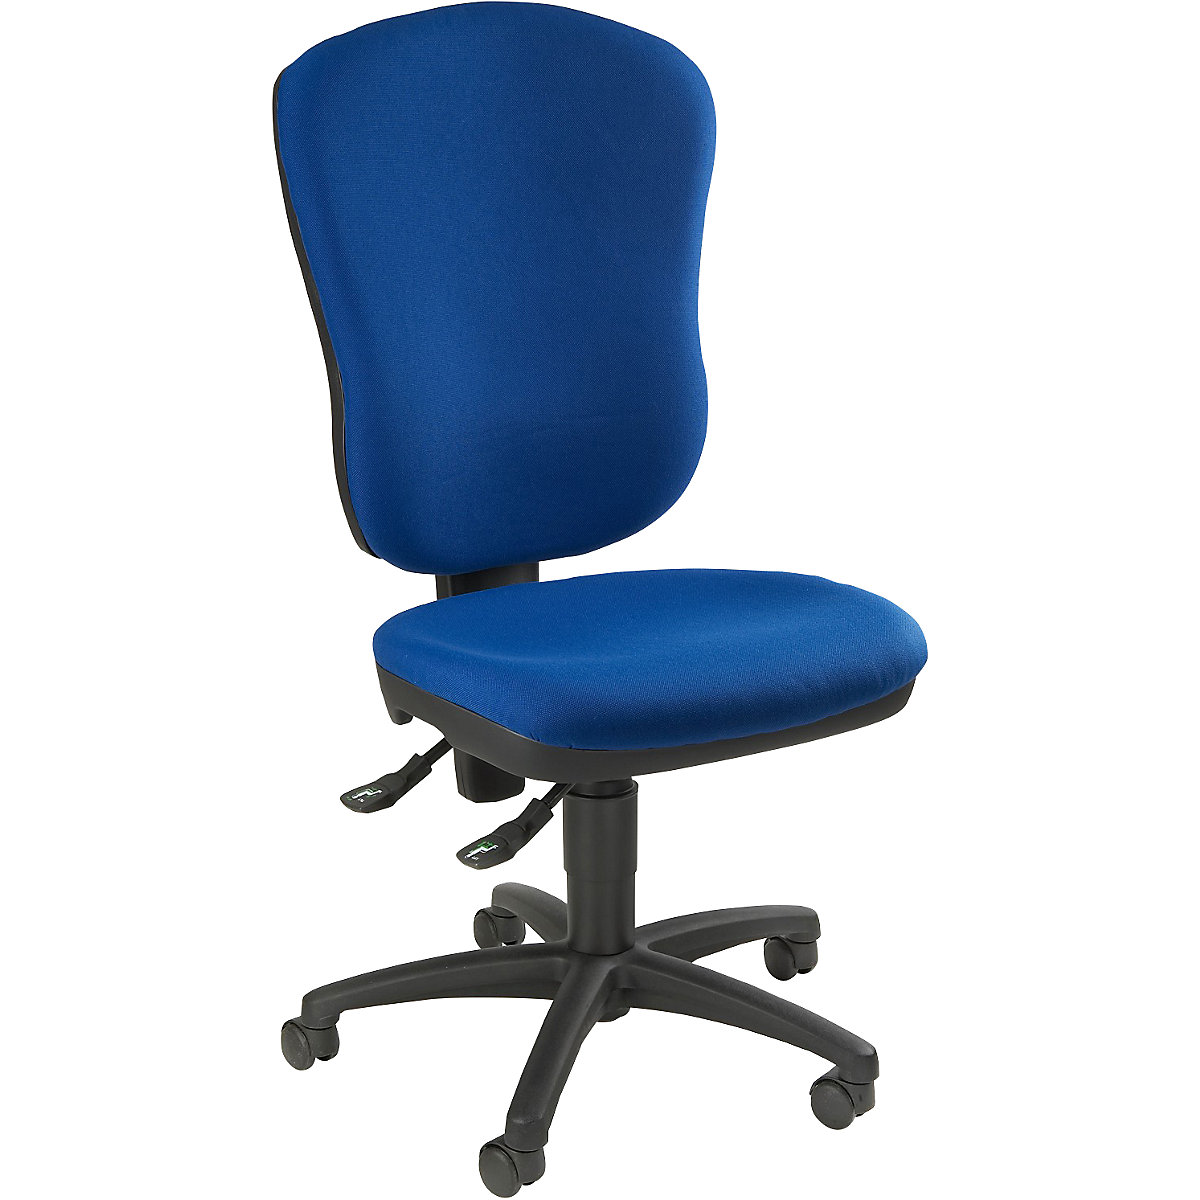 Standardna okretna stolica – Topstar, bez naslona za ruke, s lumbalnom potporom, visina naslona za leđa 570 mm, presvlaka u royal plavoj boji-1